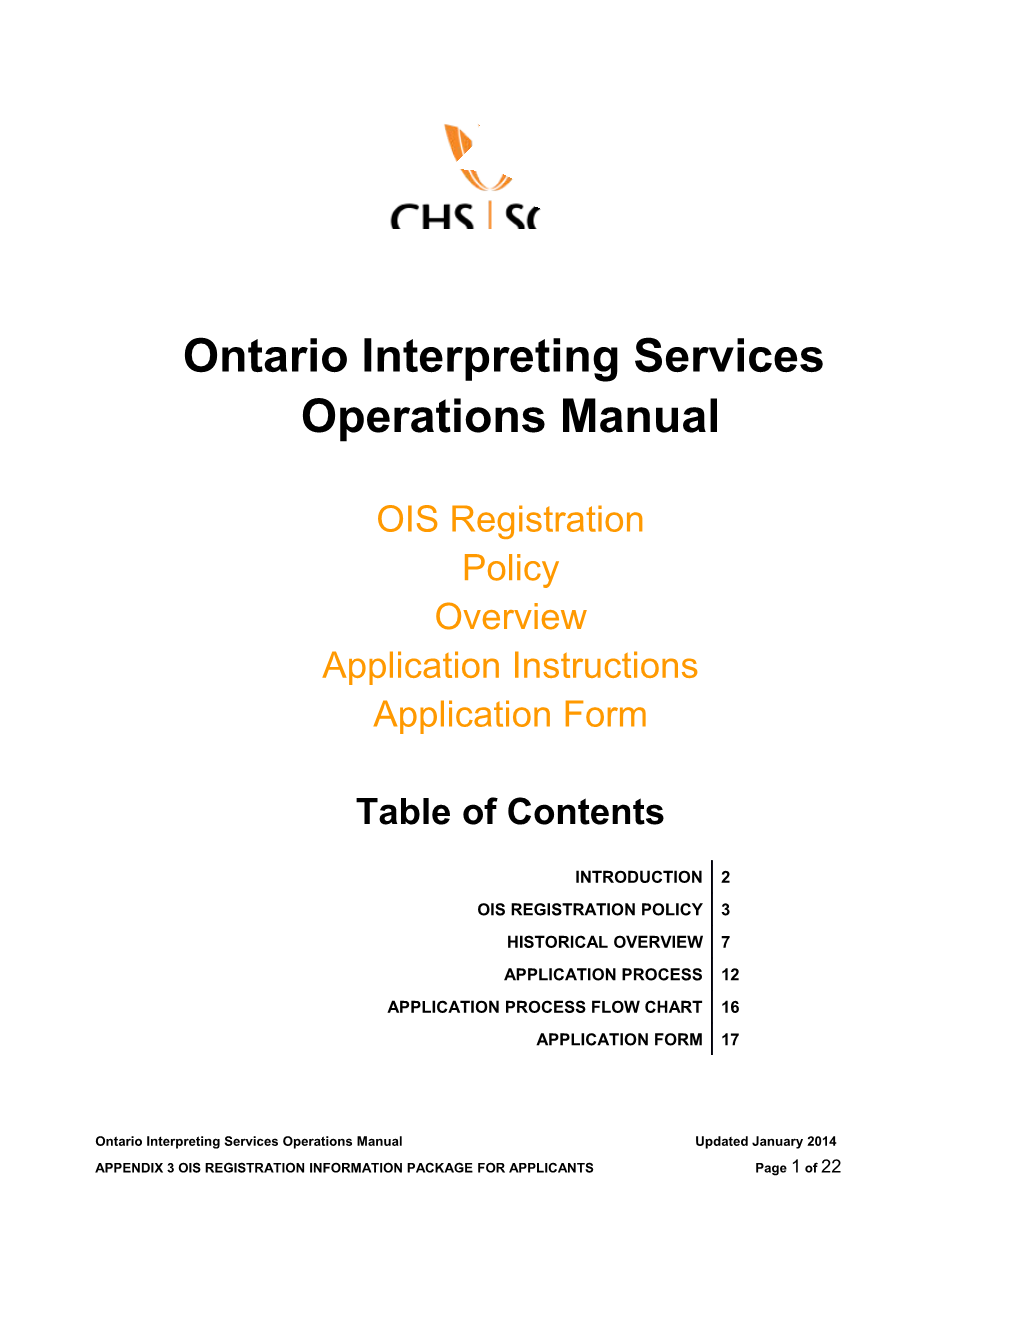 Appendix 3 - Ois Interpreter Registration Manual